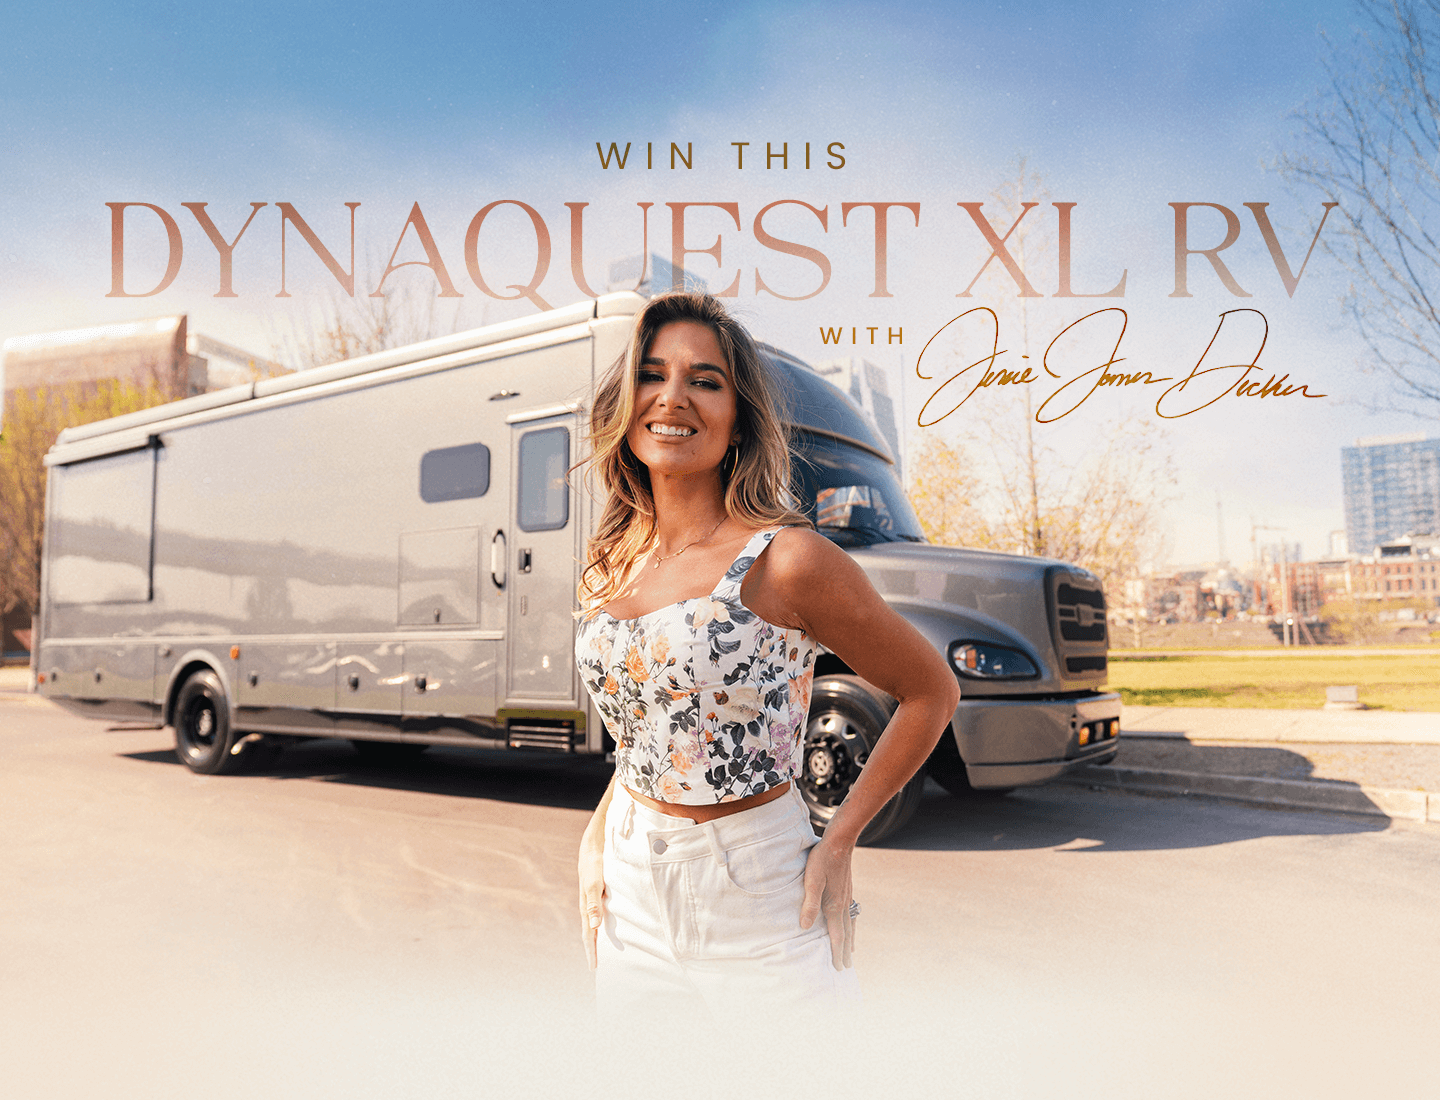 Win this Dynaquest XL RV with Jessie James Deckerl